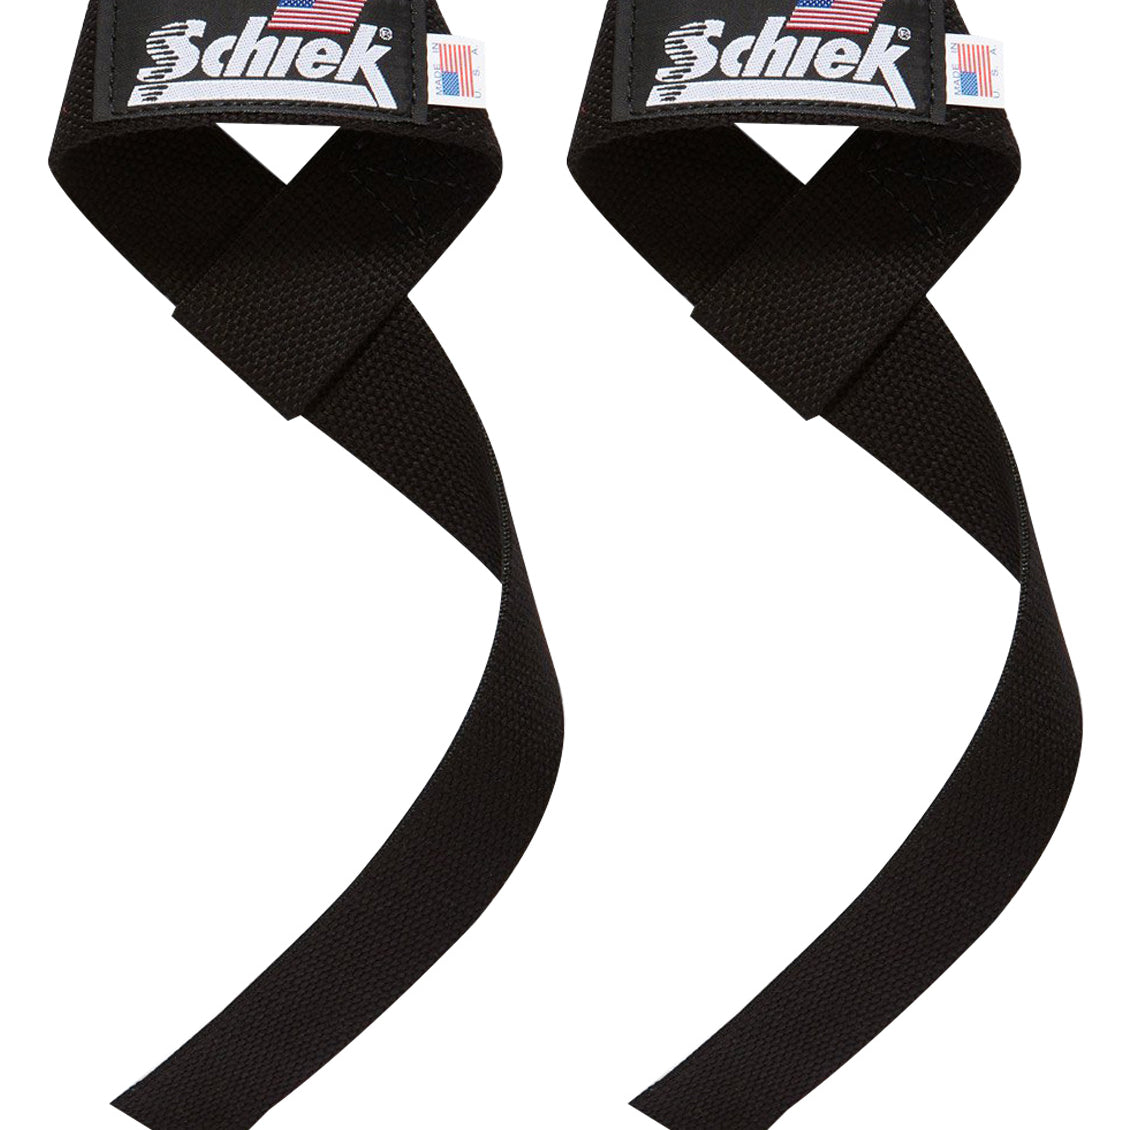 Schiek Sports Model 1000-BLS2 Extra-Wide 20" Basic Lifting Straps - Black Schiek Sports